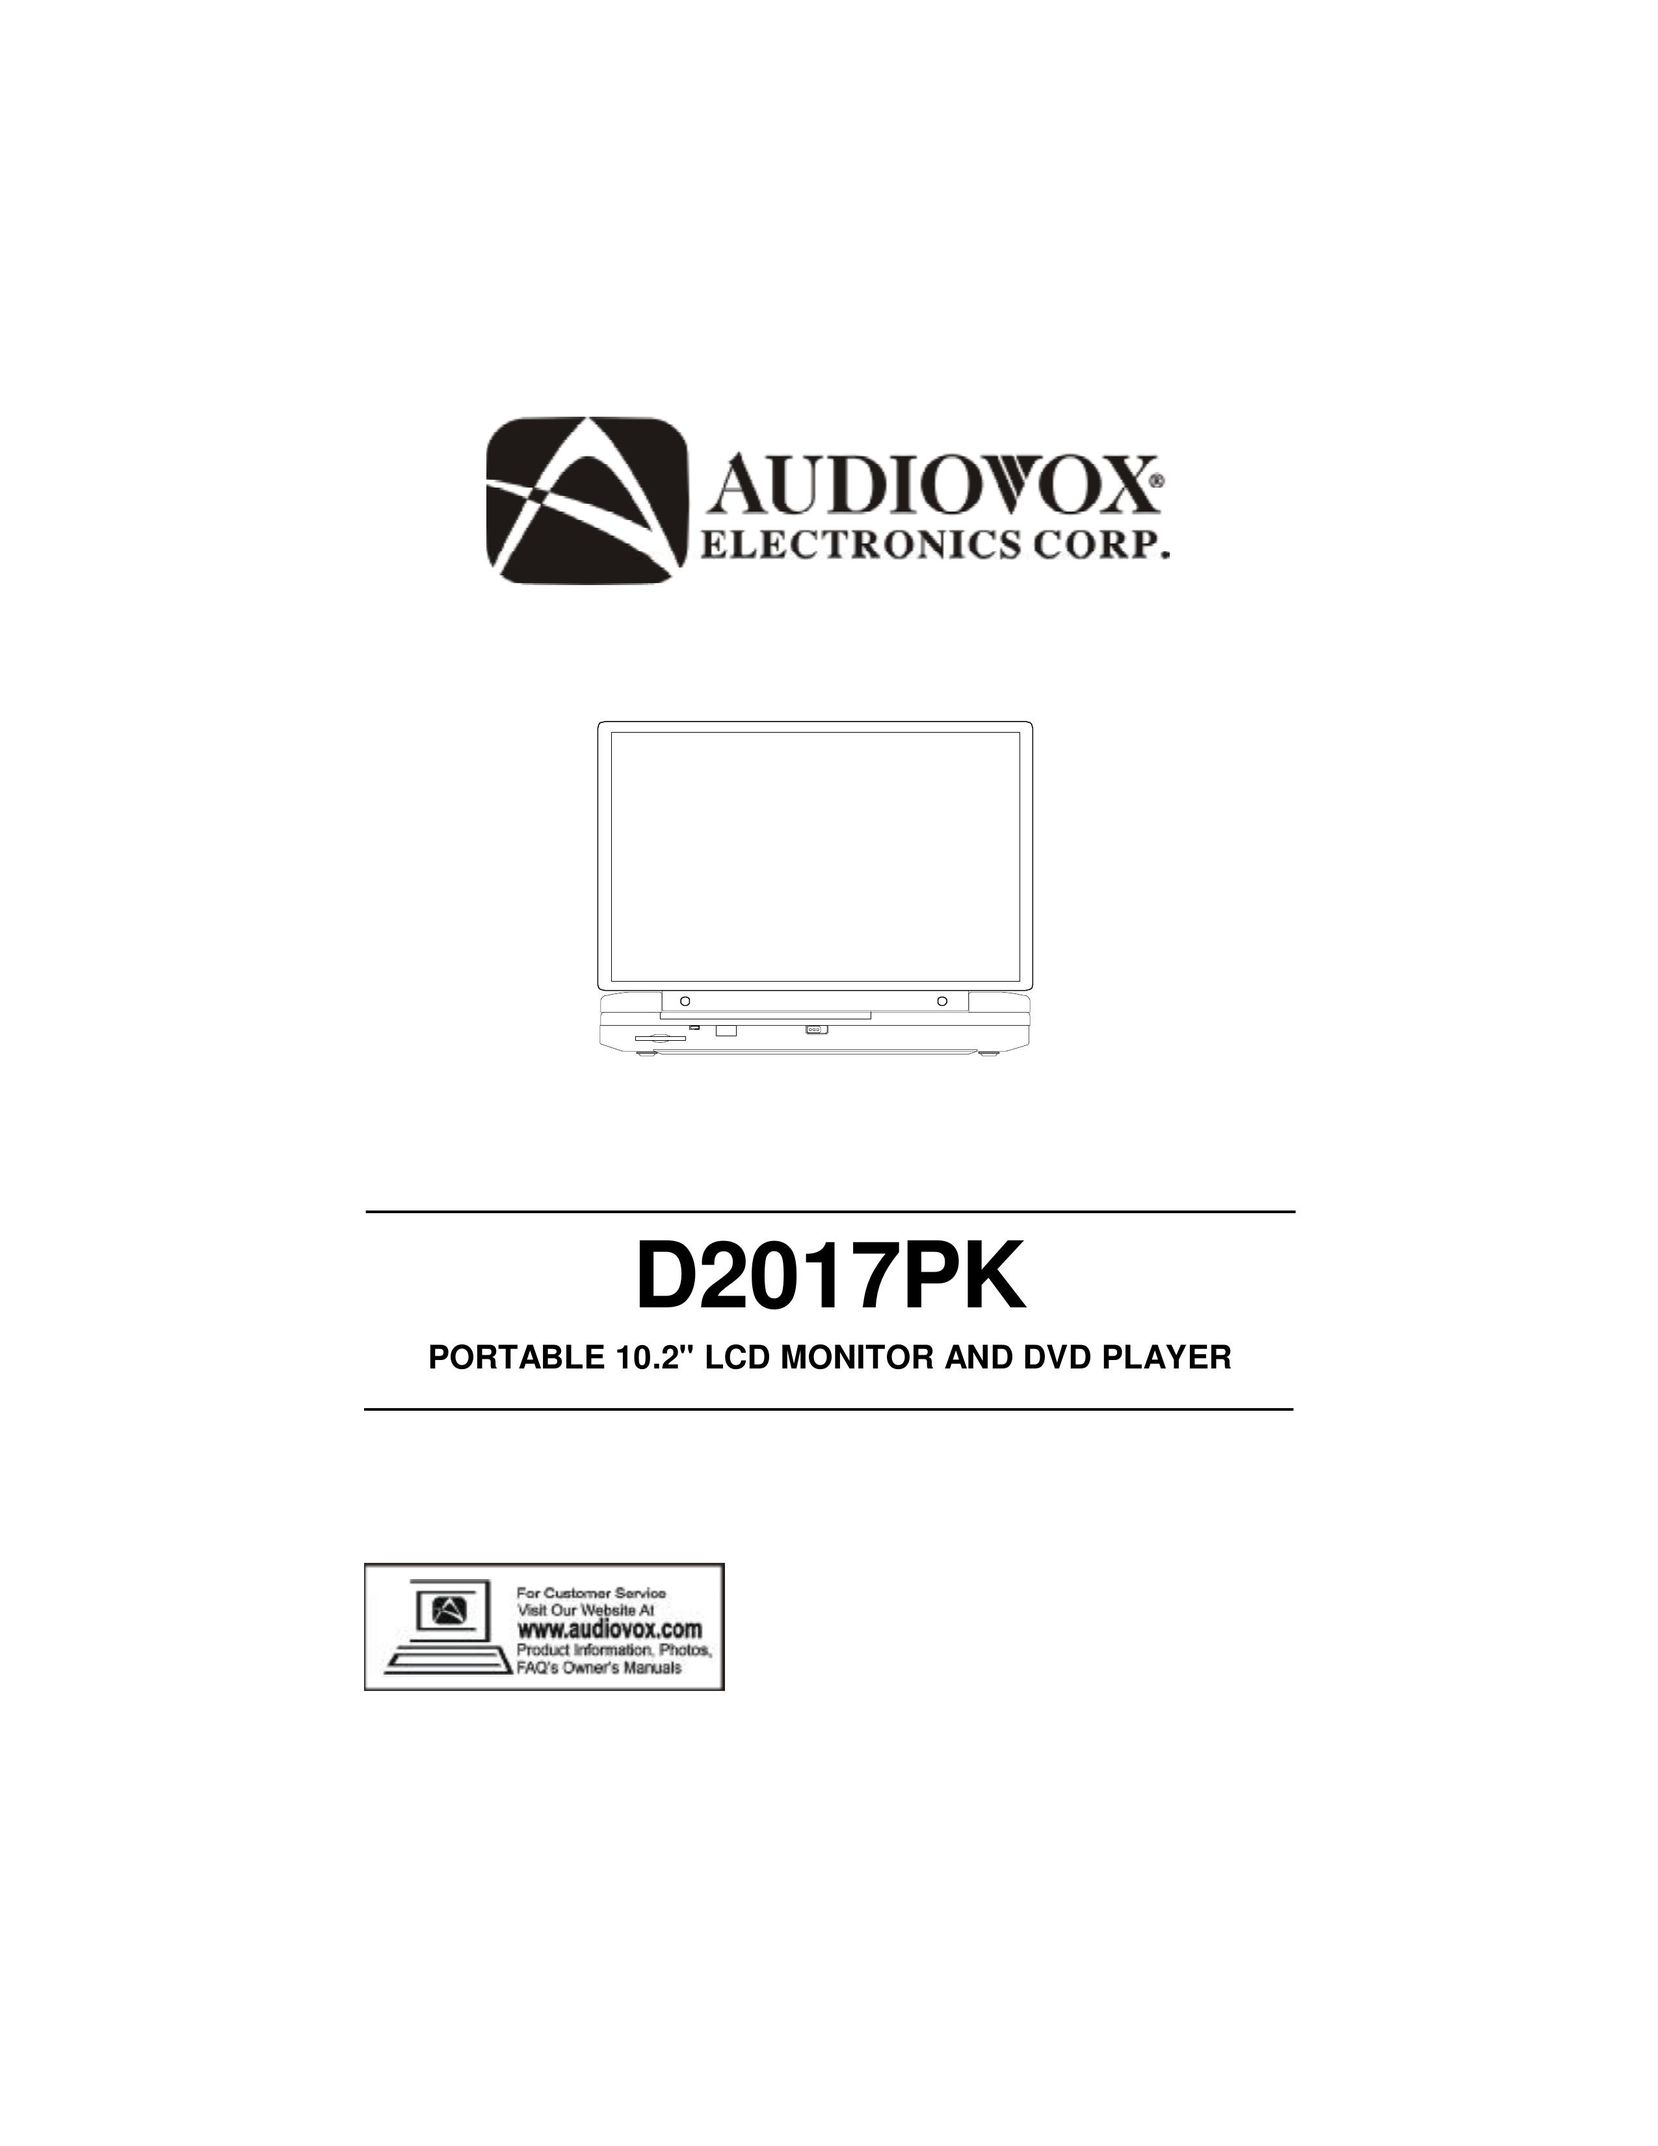 Audiovox D2017PK Portable DVD Player User Manual